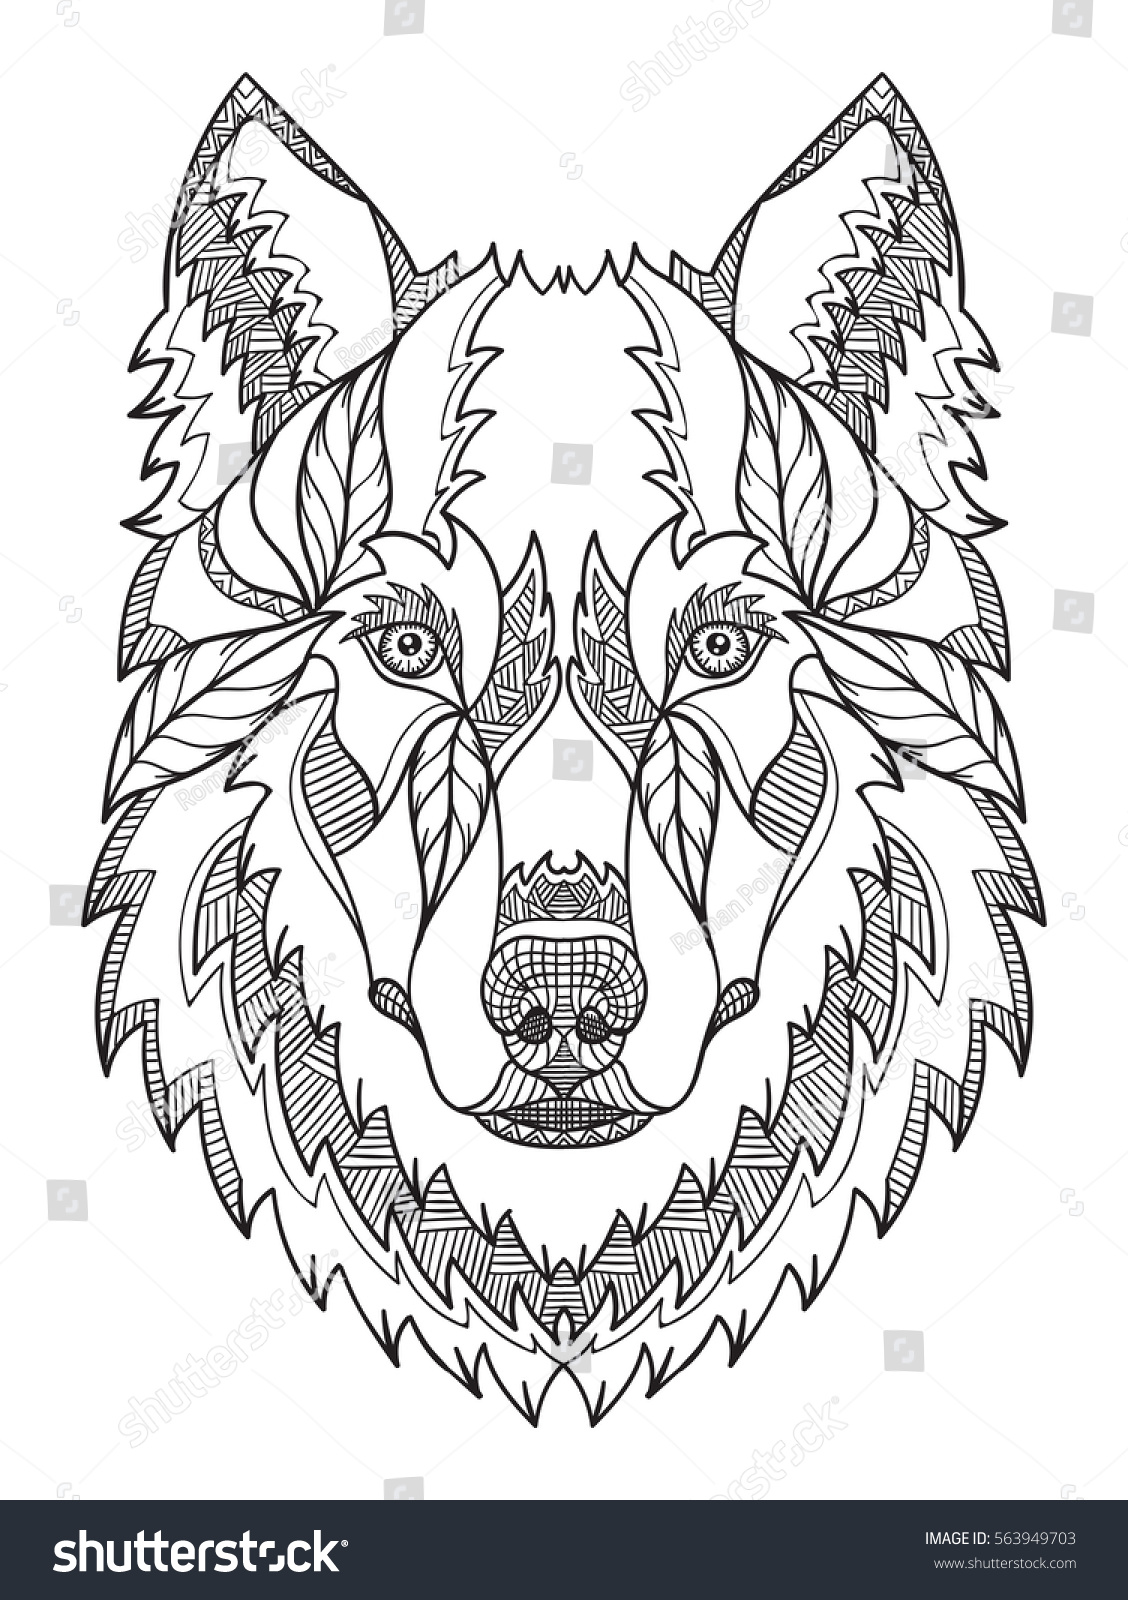 SVG of Gray wolf head zentangle, doodle stylized, vector, illustration, hand drawn, pattern. Zen art. Ornate vector. Black and white illustration on white background. Line art. svg